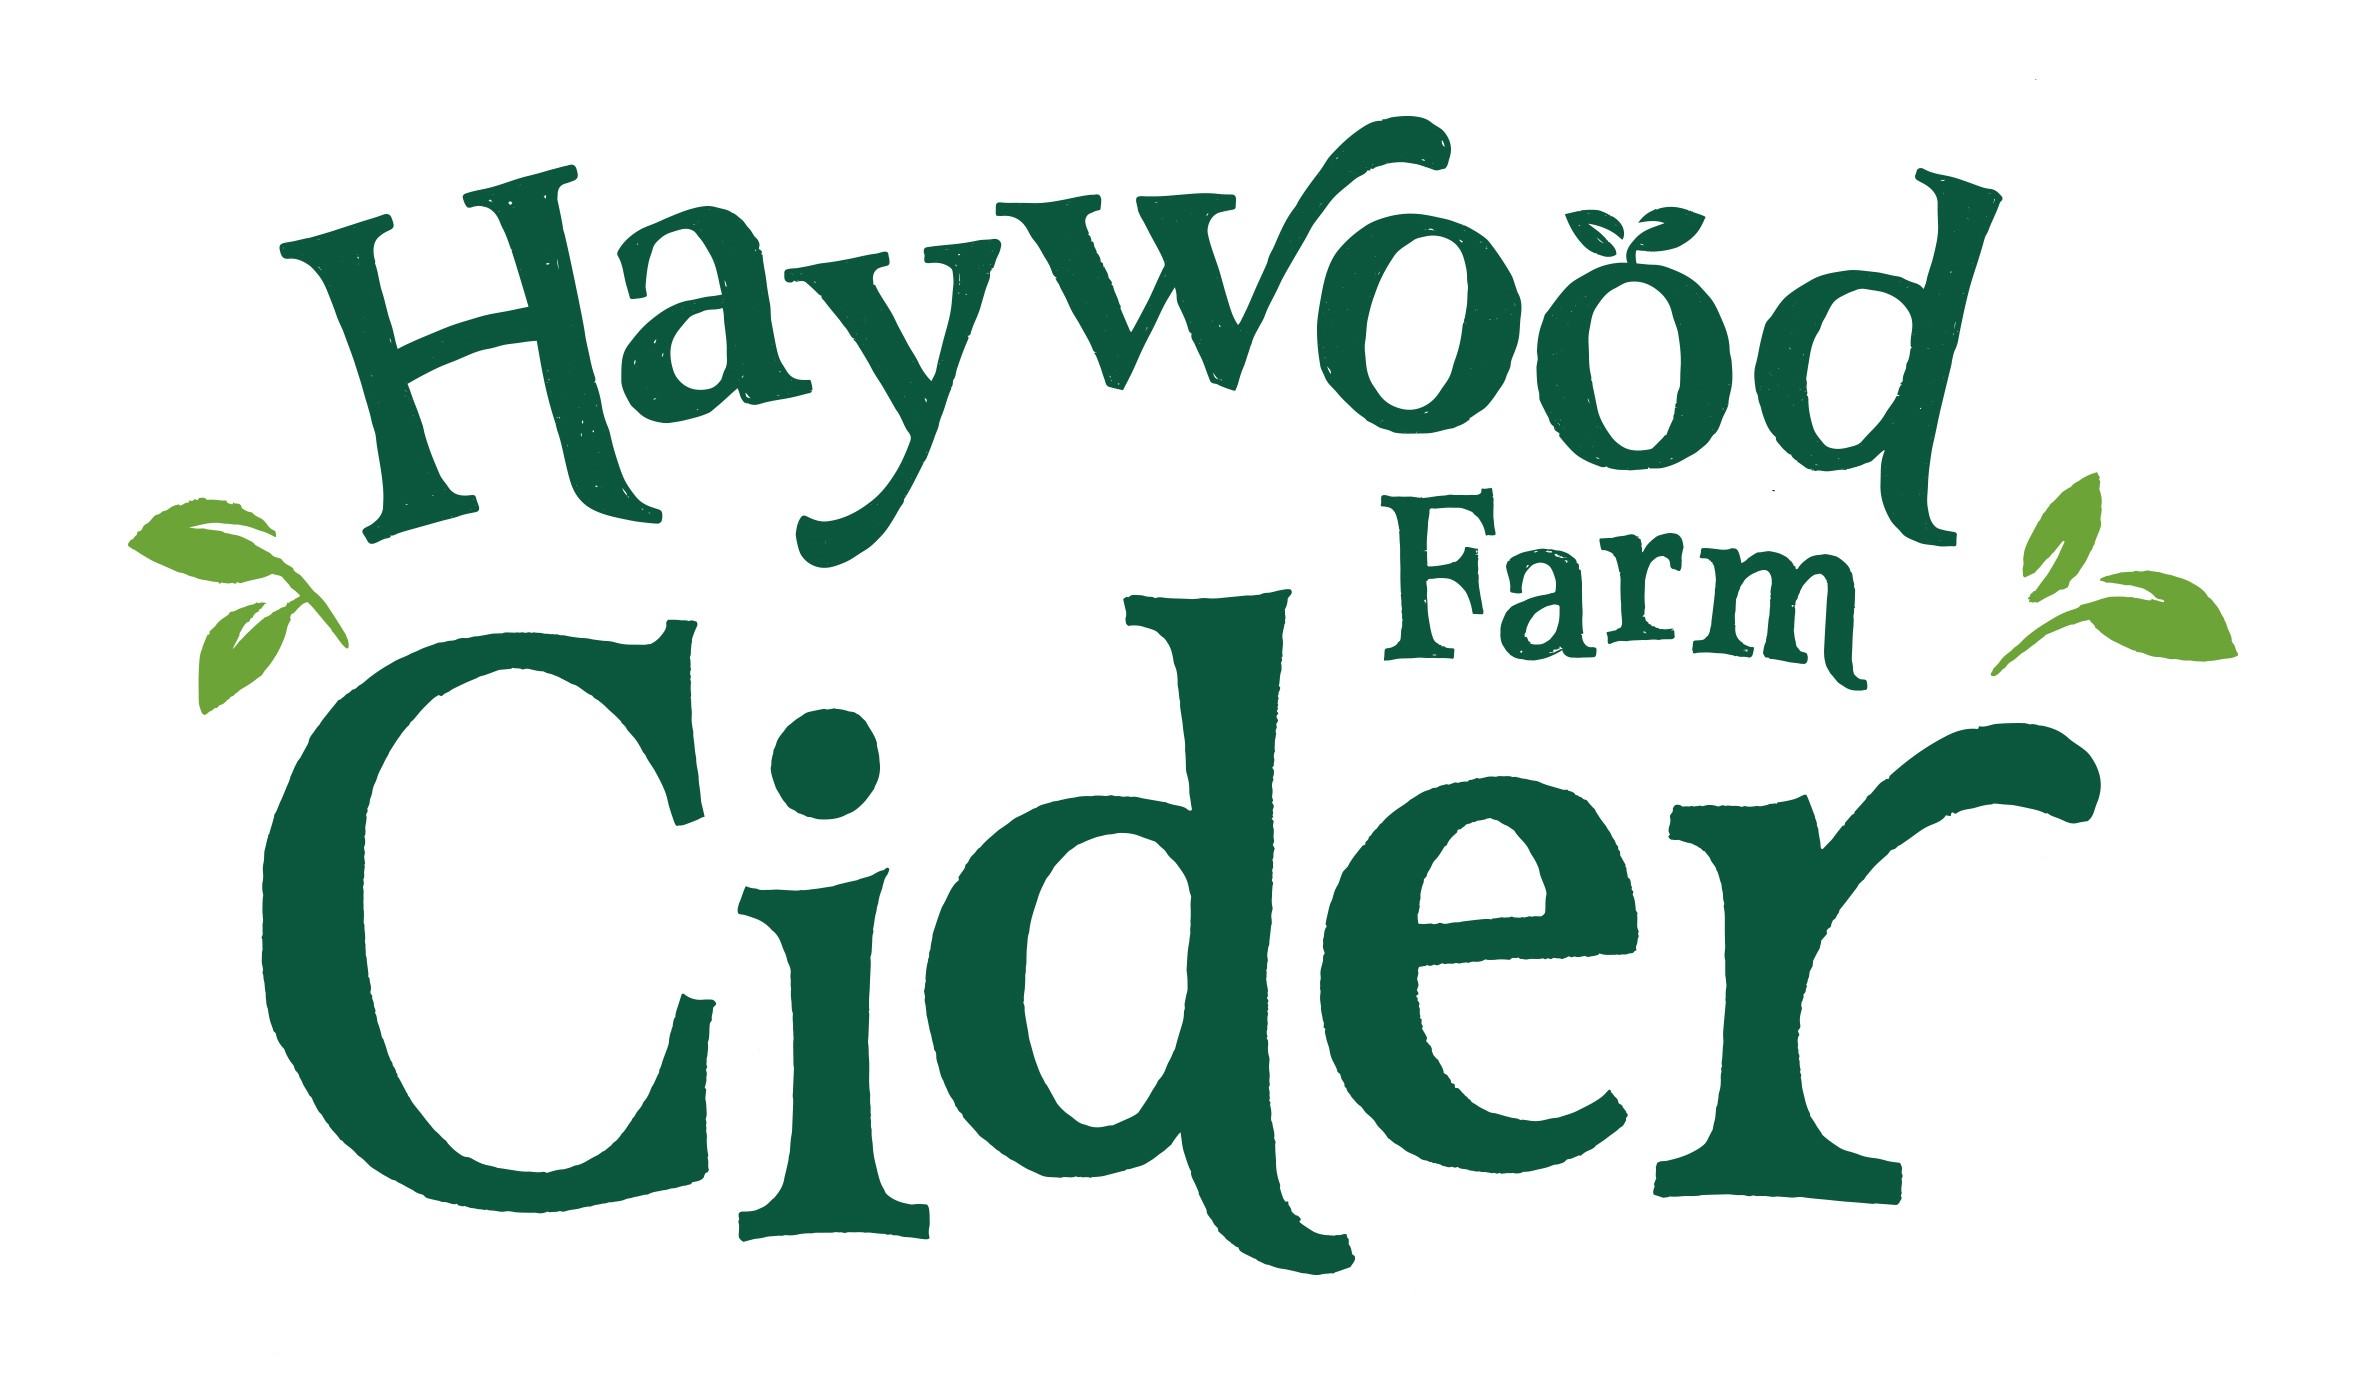 HAYWOODS FARM CIDER